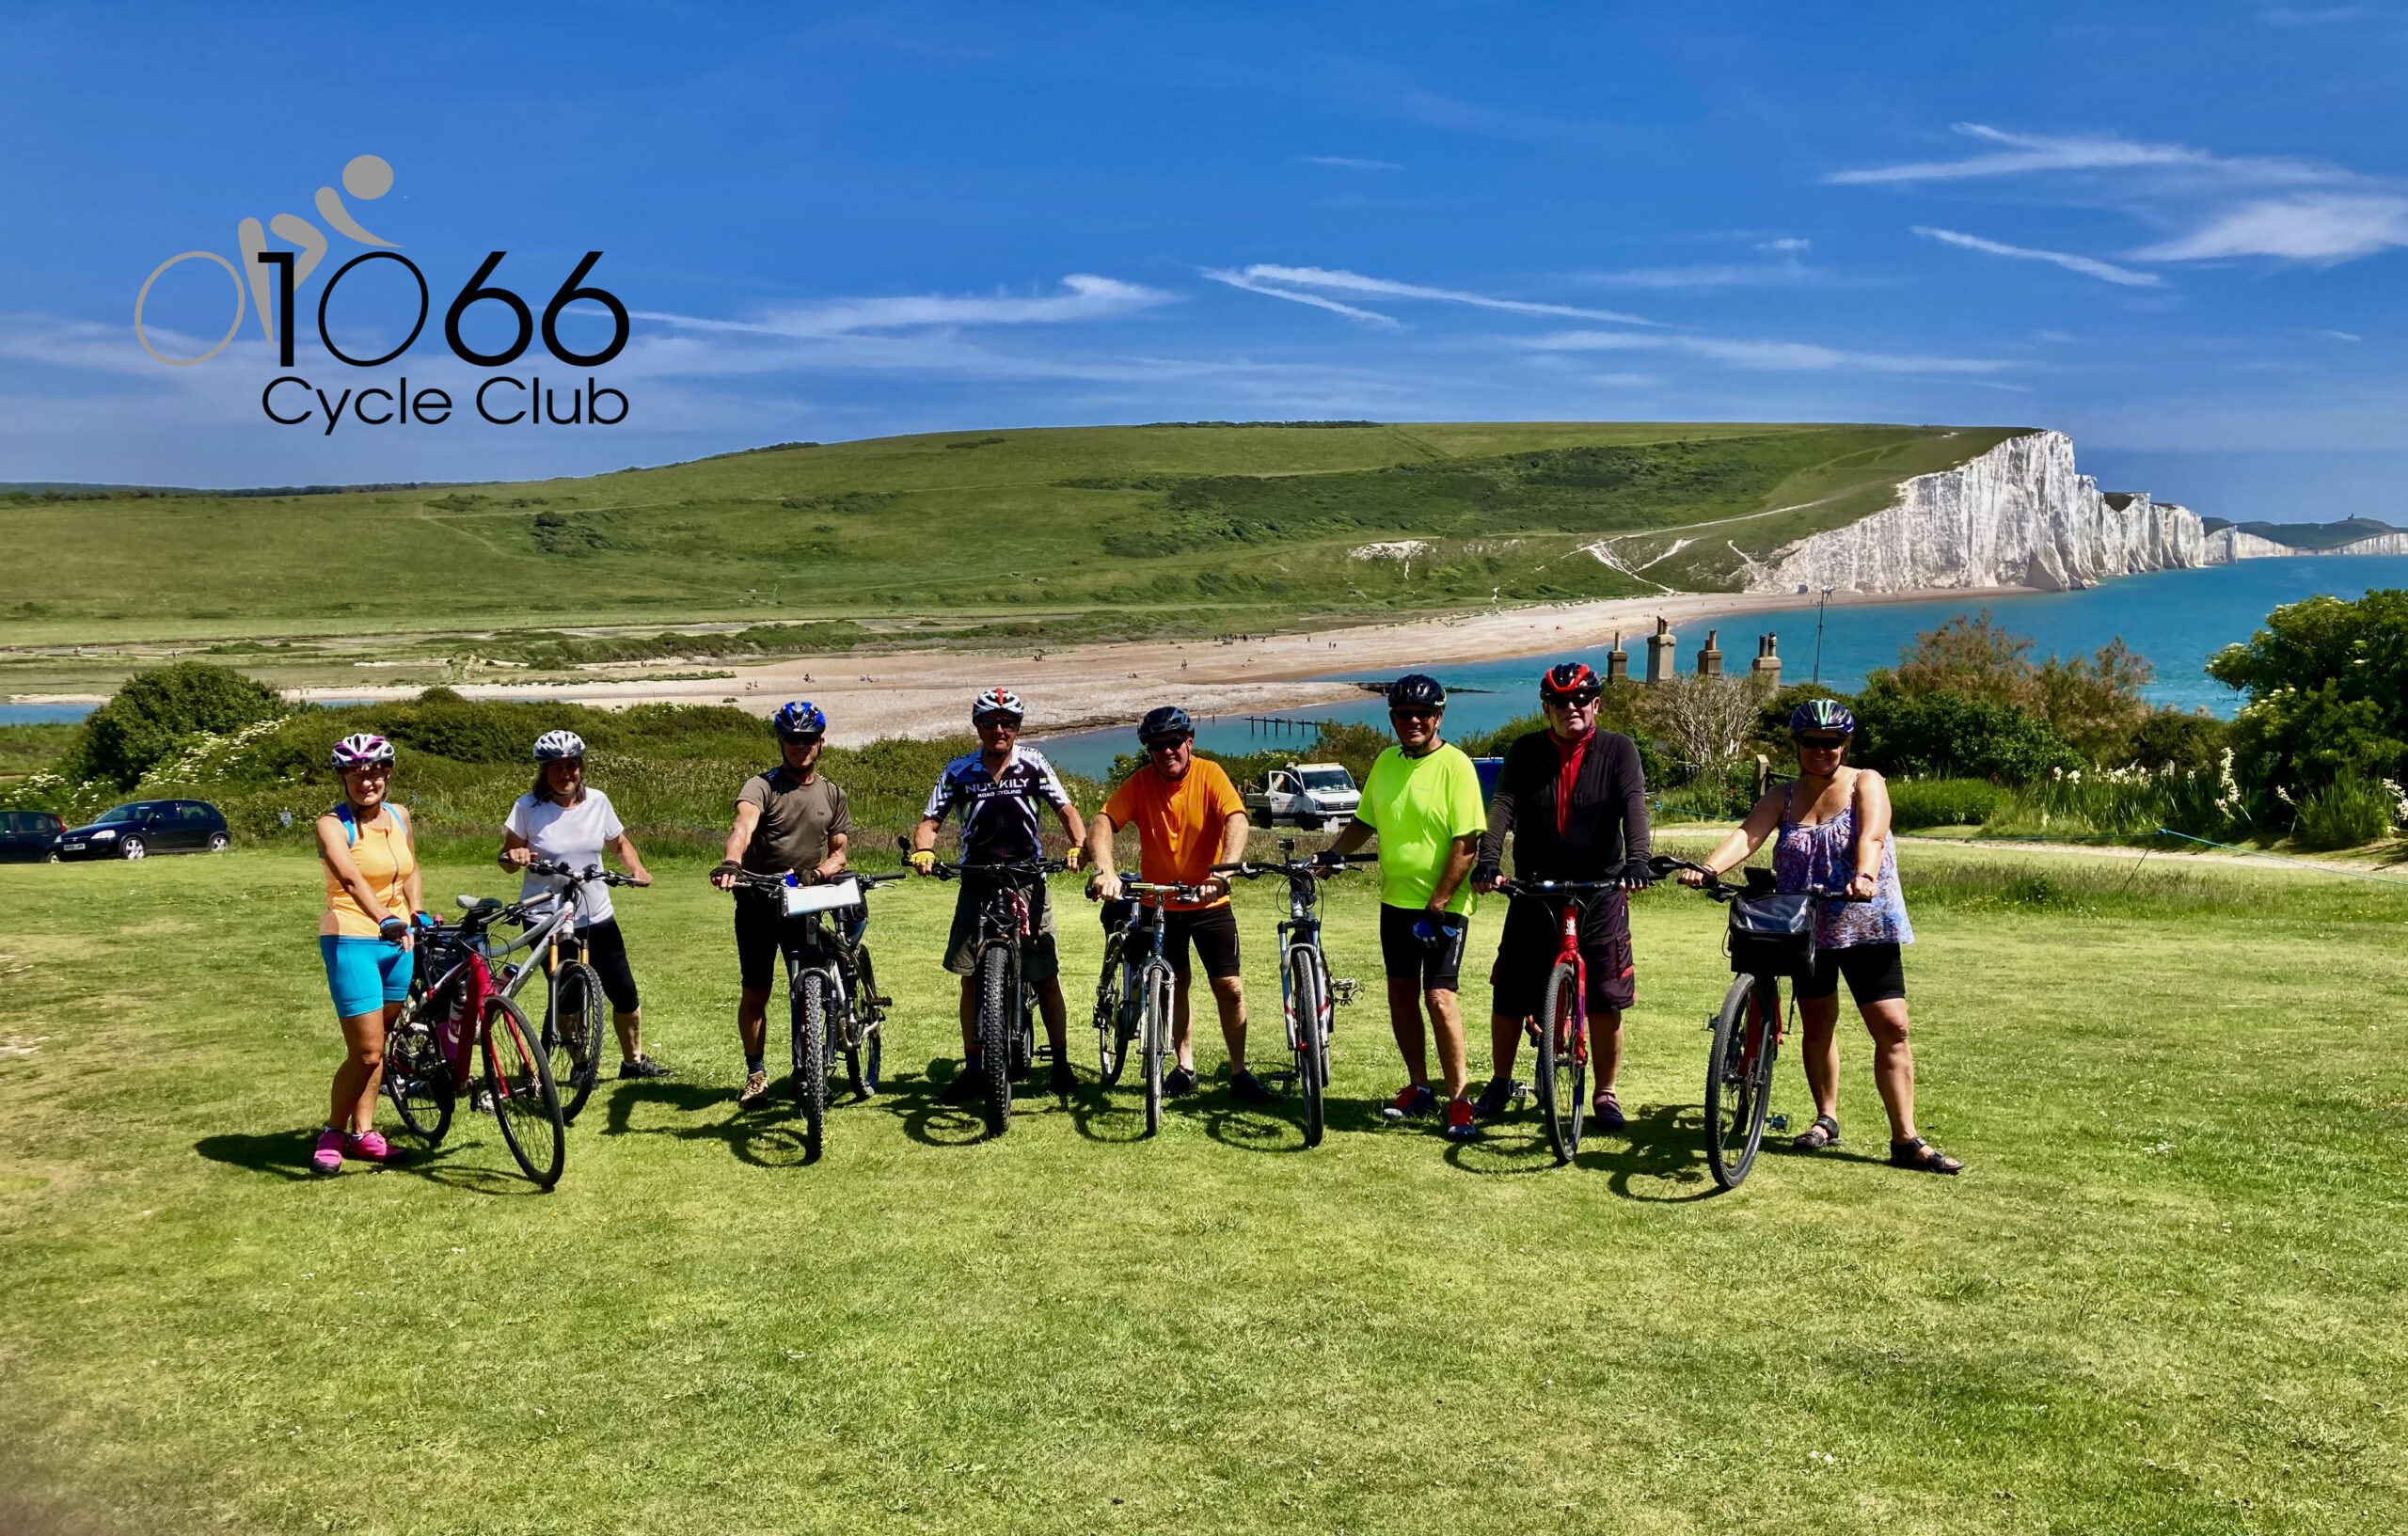 1066 Cycle Club